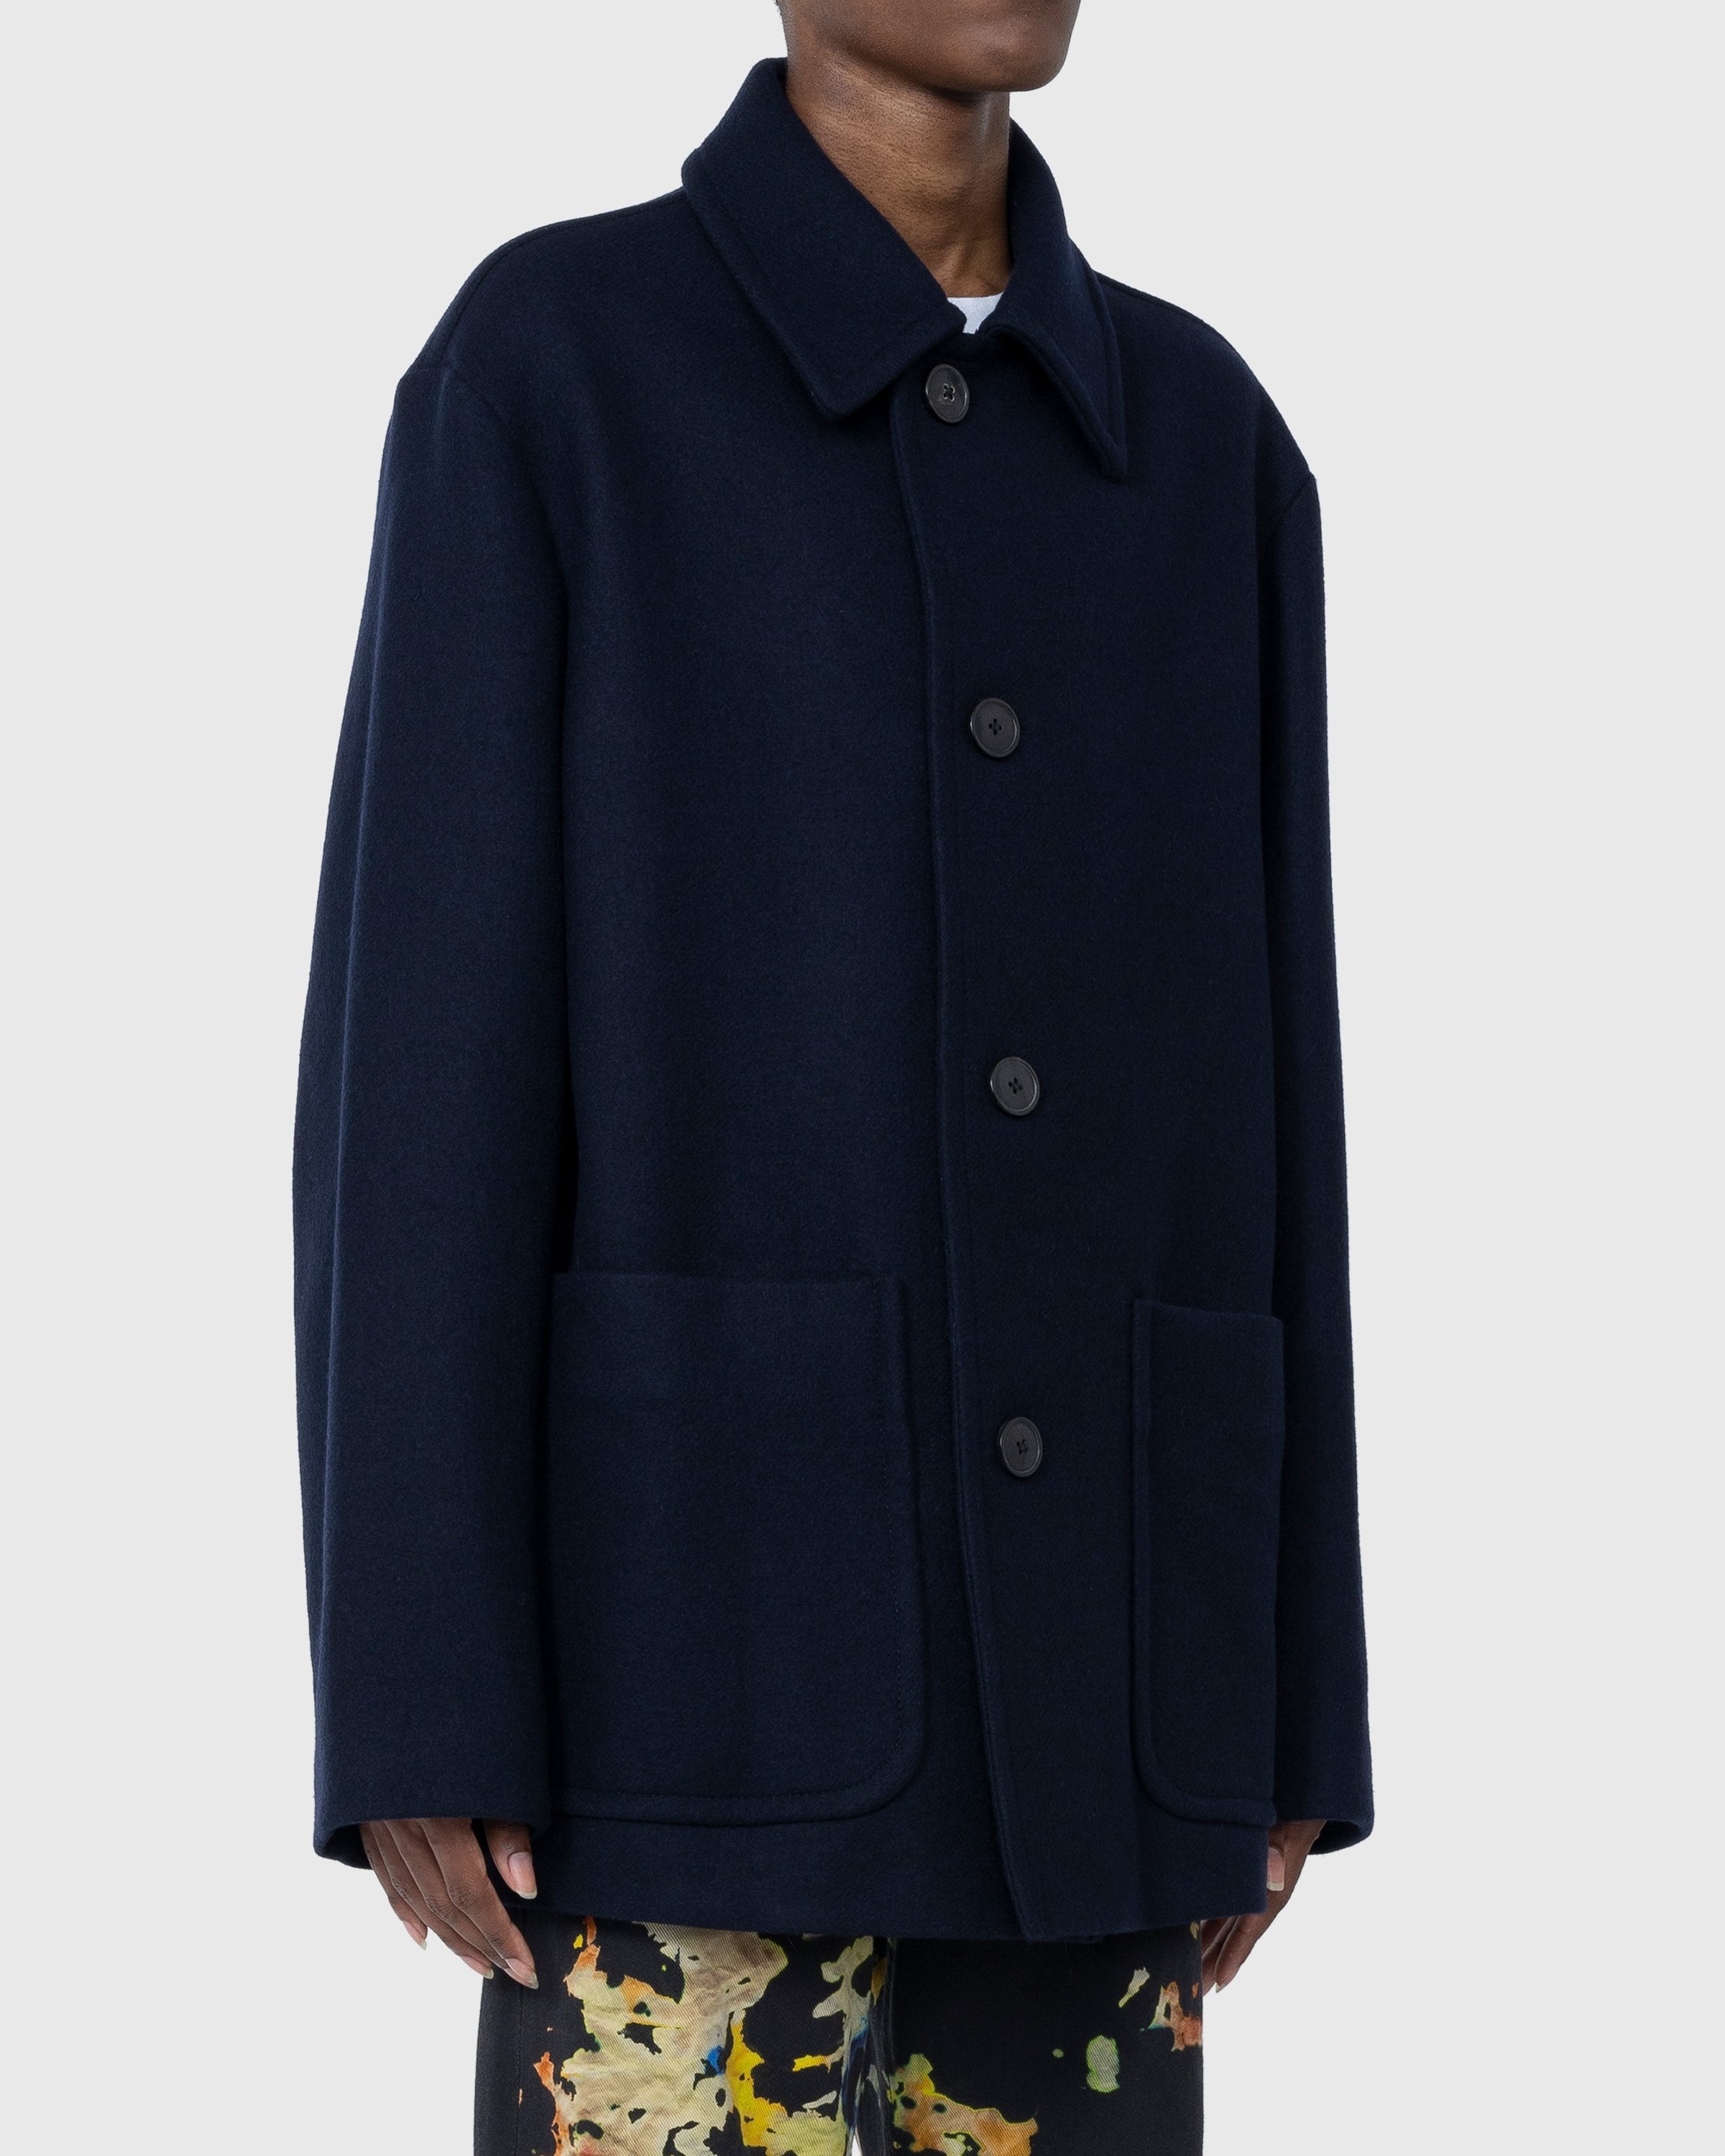 Dries van Noten – Ronnor Workwear Jacket Navy - Outerwear - Blue - Image 3